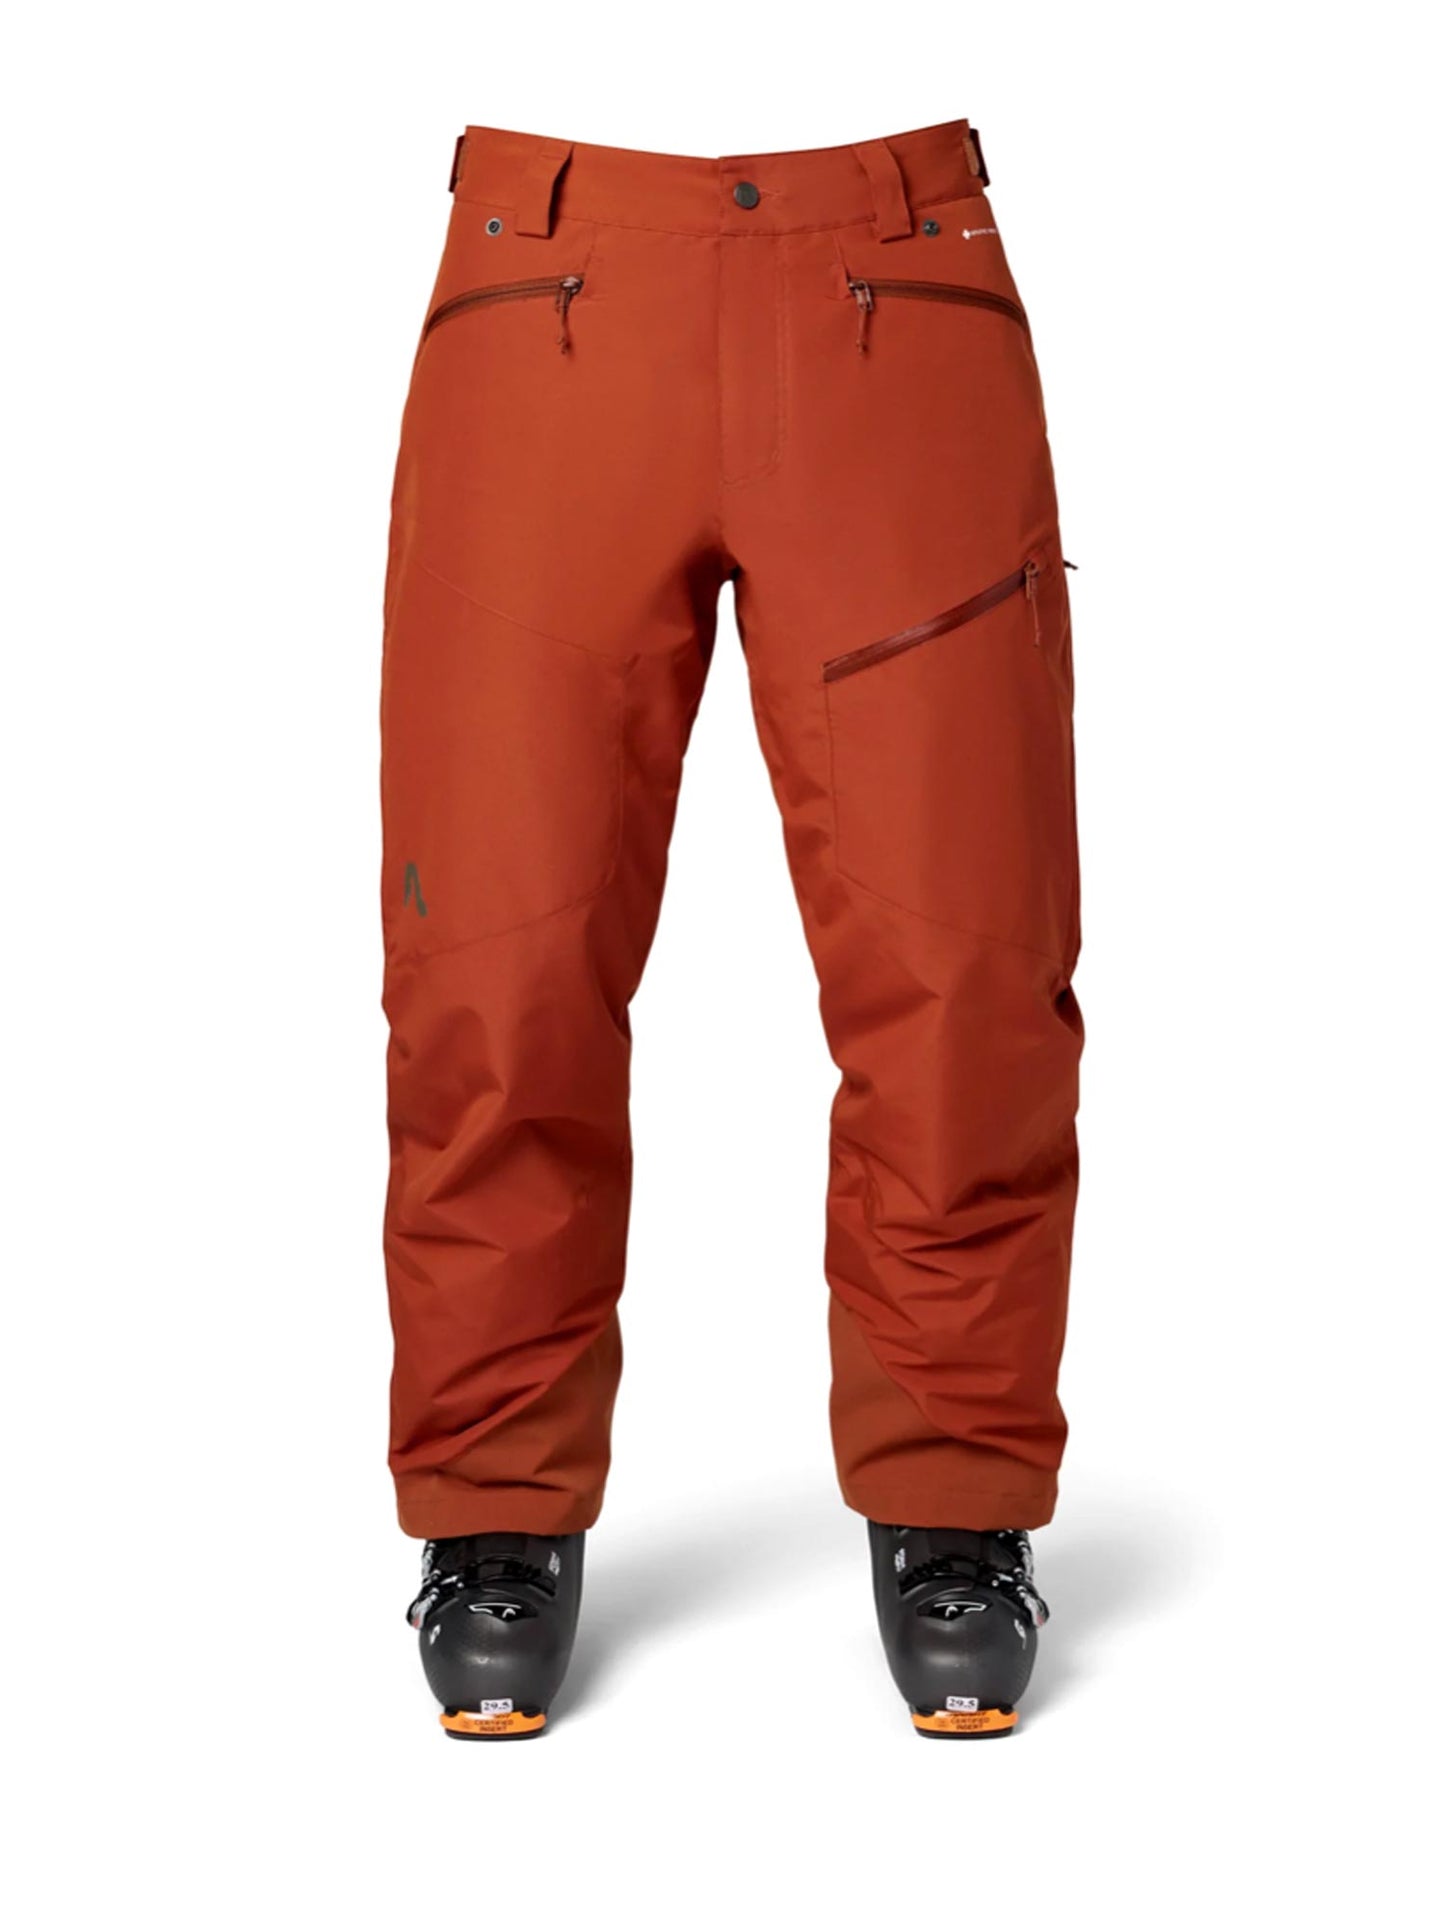 Flylow Snowwan Pant, rust color